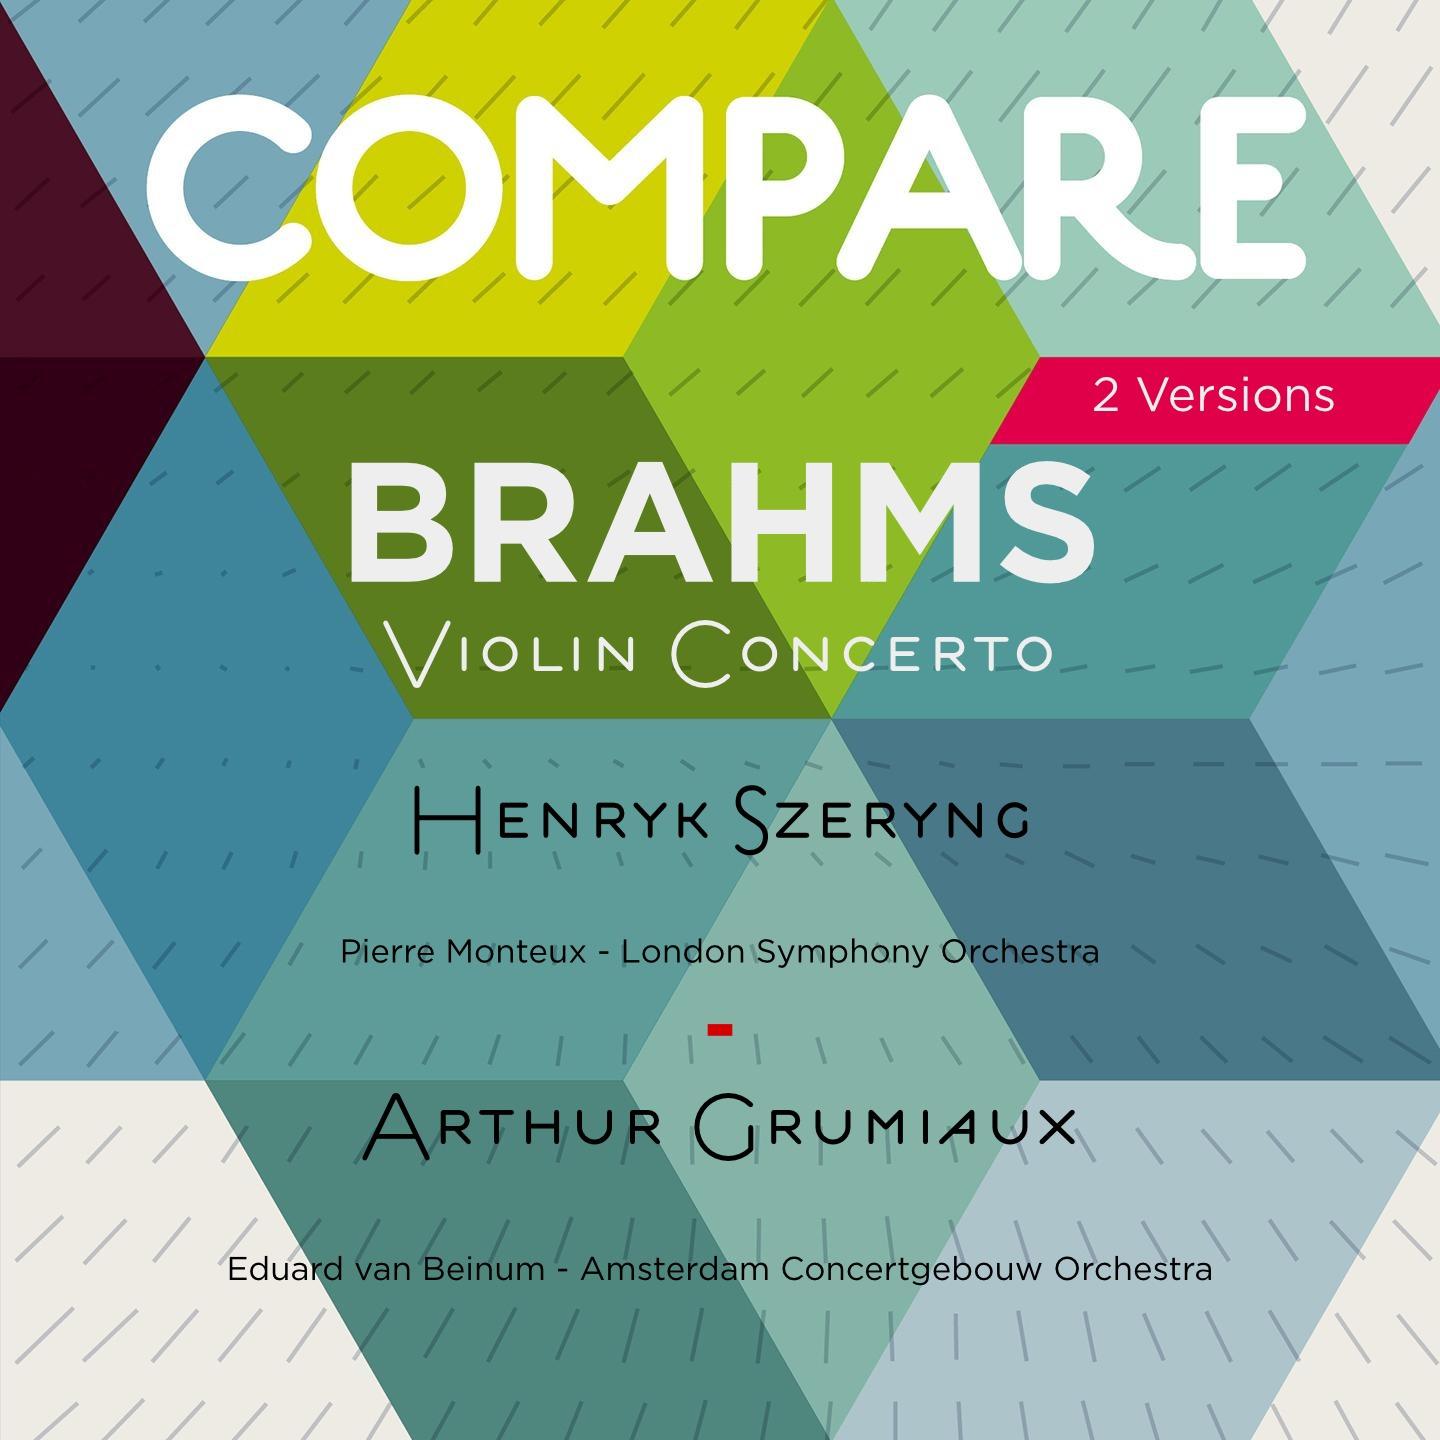 Brahms: Violin Concerto, Henryk Szeryng vs. Arthur Grumiaux (Compare 2 Versions)